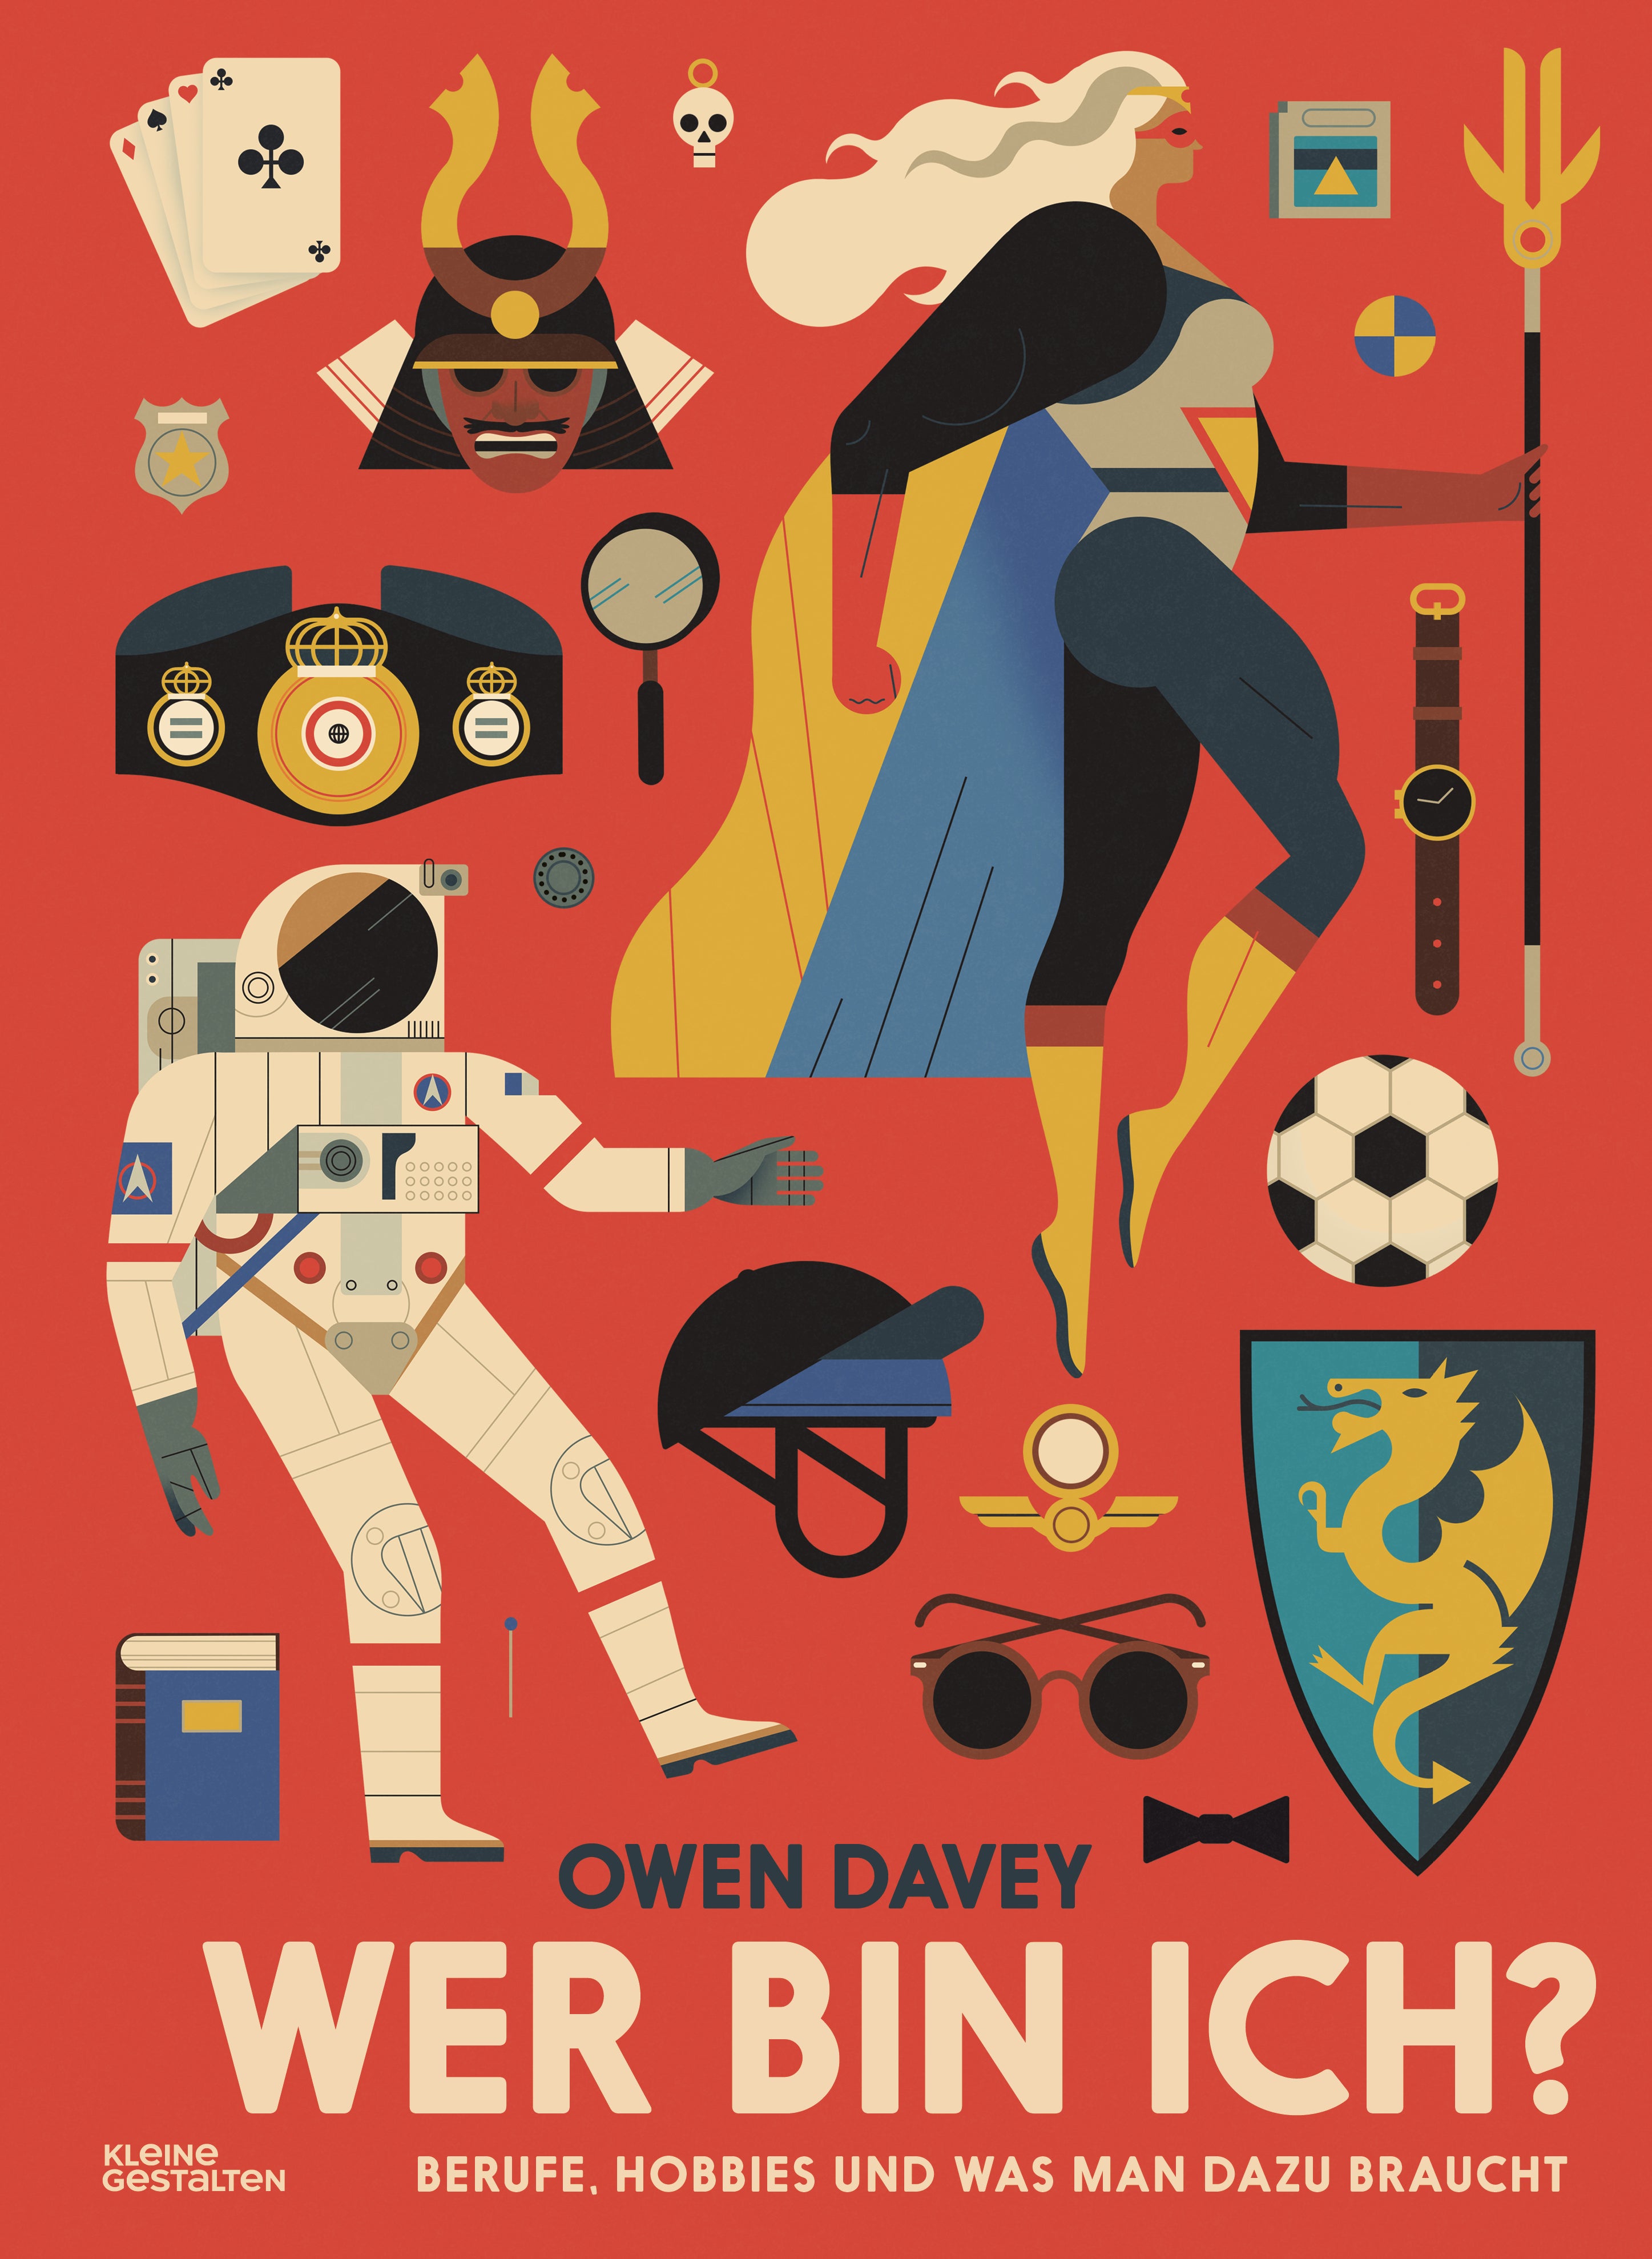 Owen Davey On His World of Illustration And Avoiding Soul Destroying Work